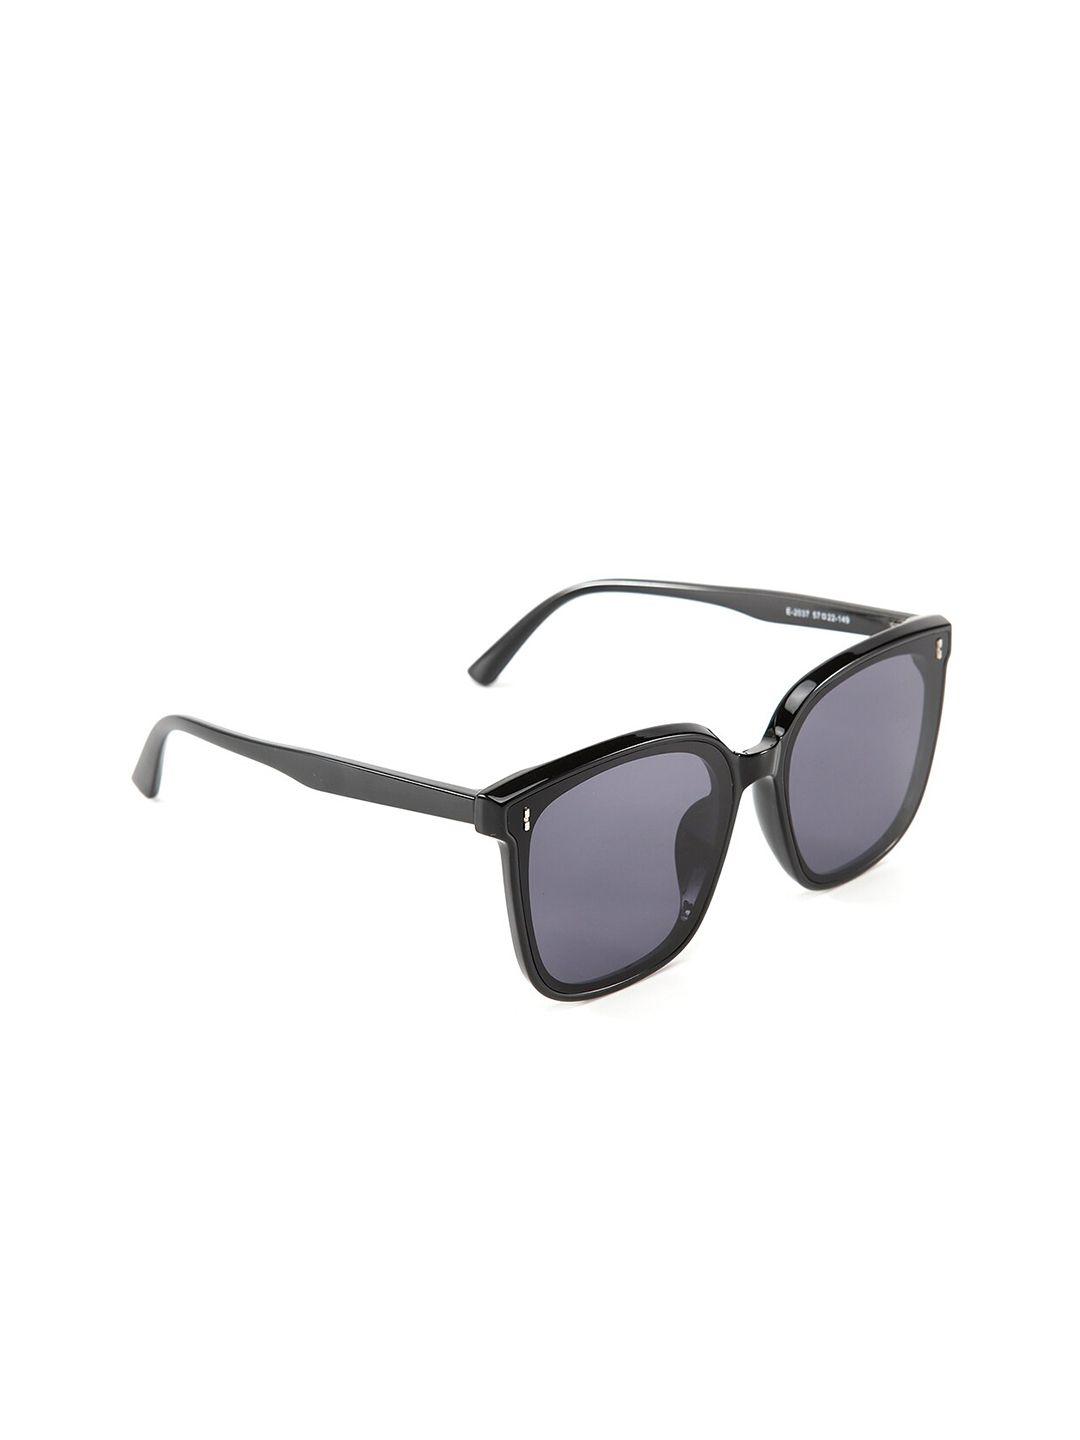 intellilens black lens & black square uv protected hd sunglasses 1000000060980